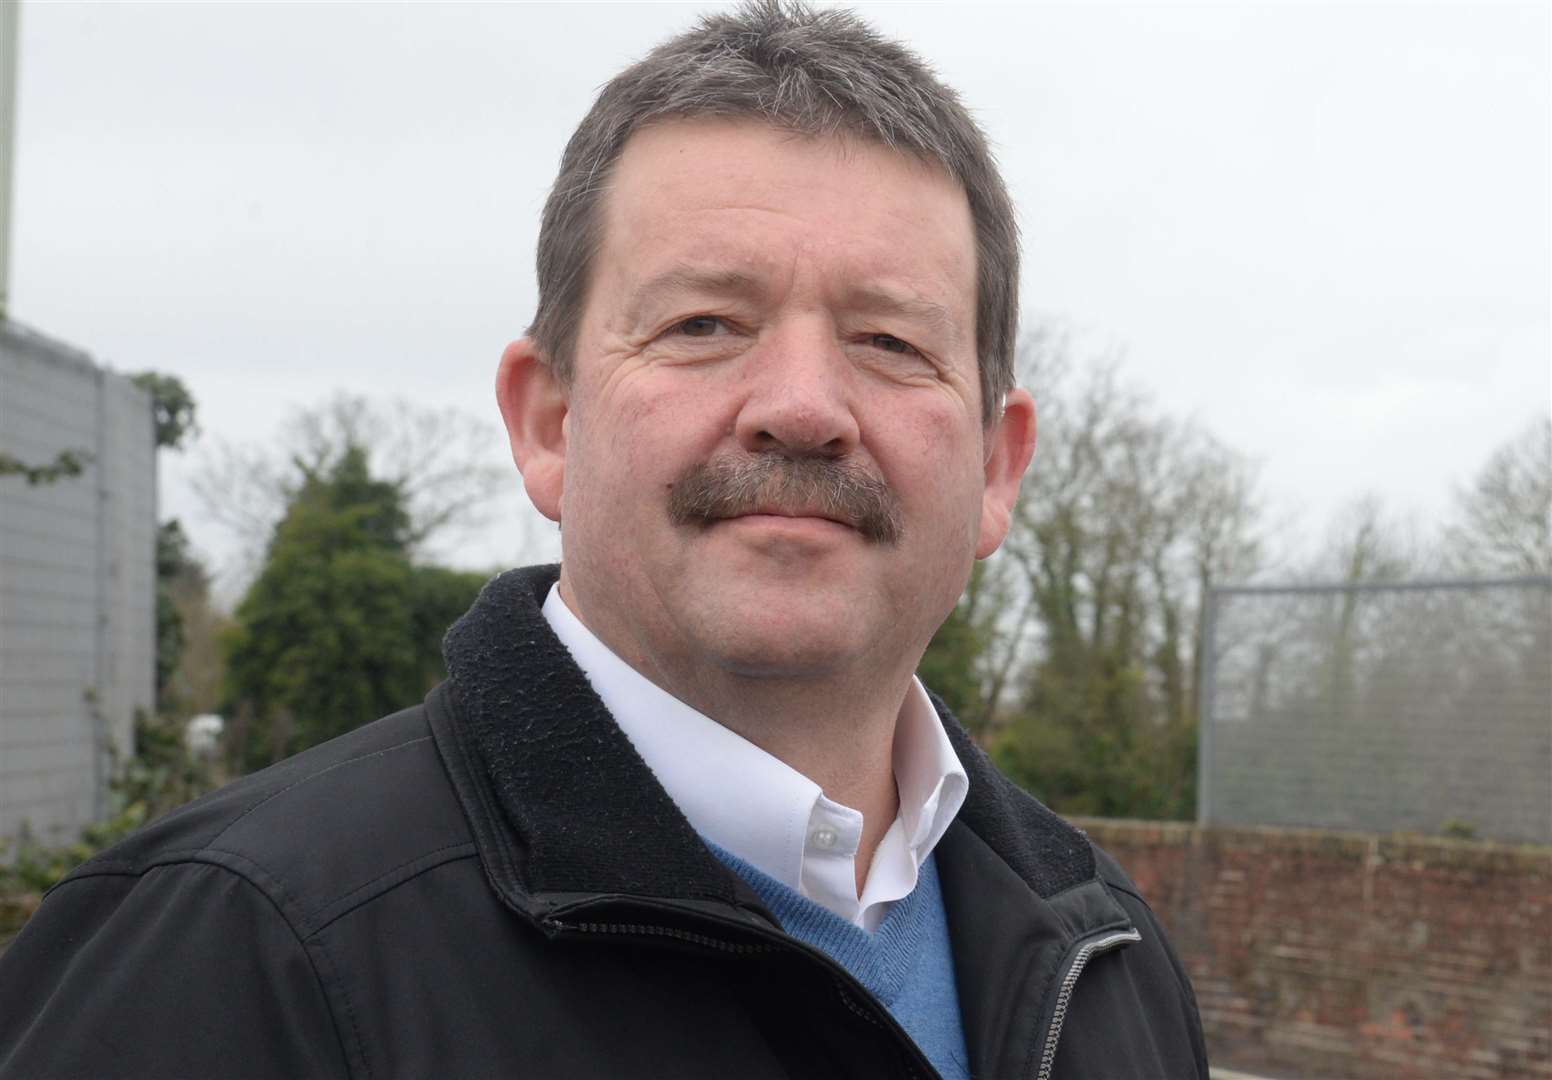 Beltinge councillor Ian Stockley